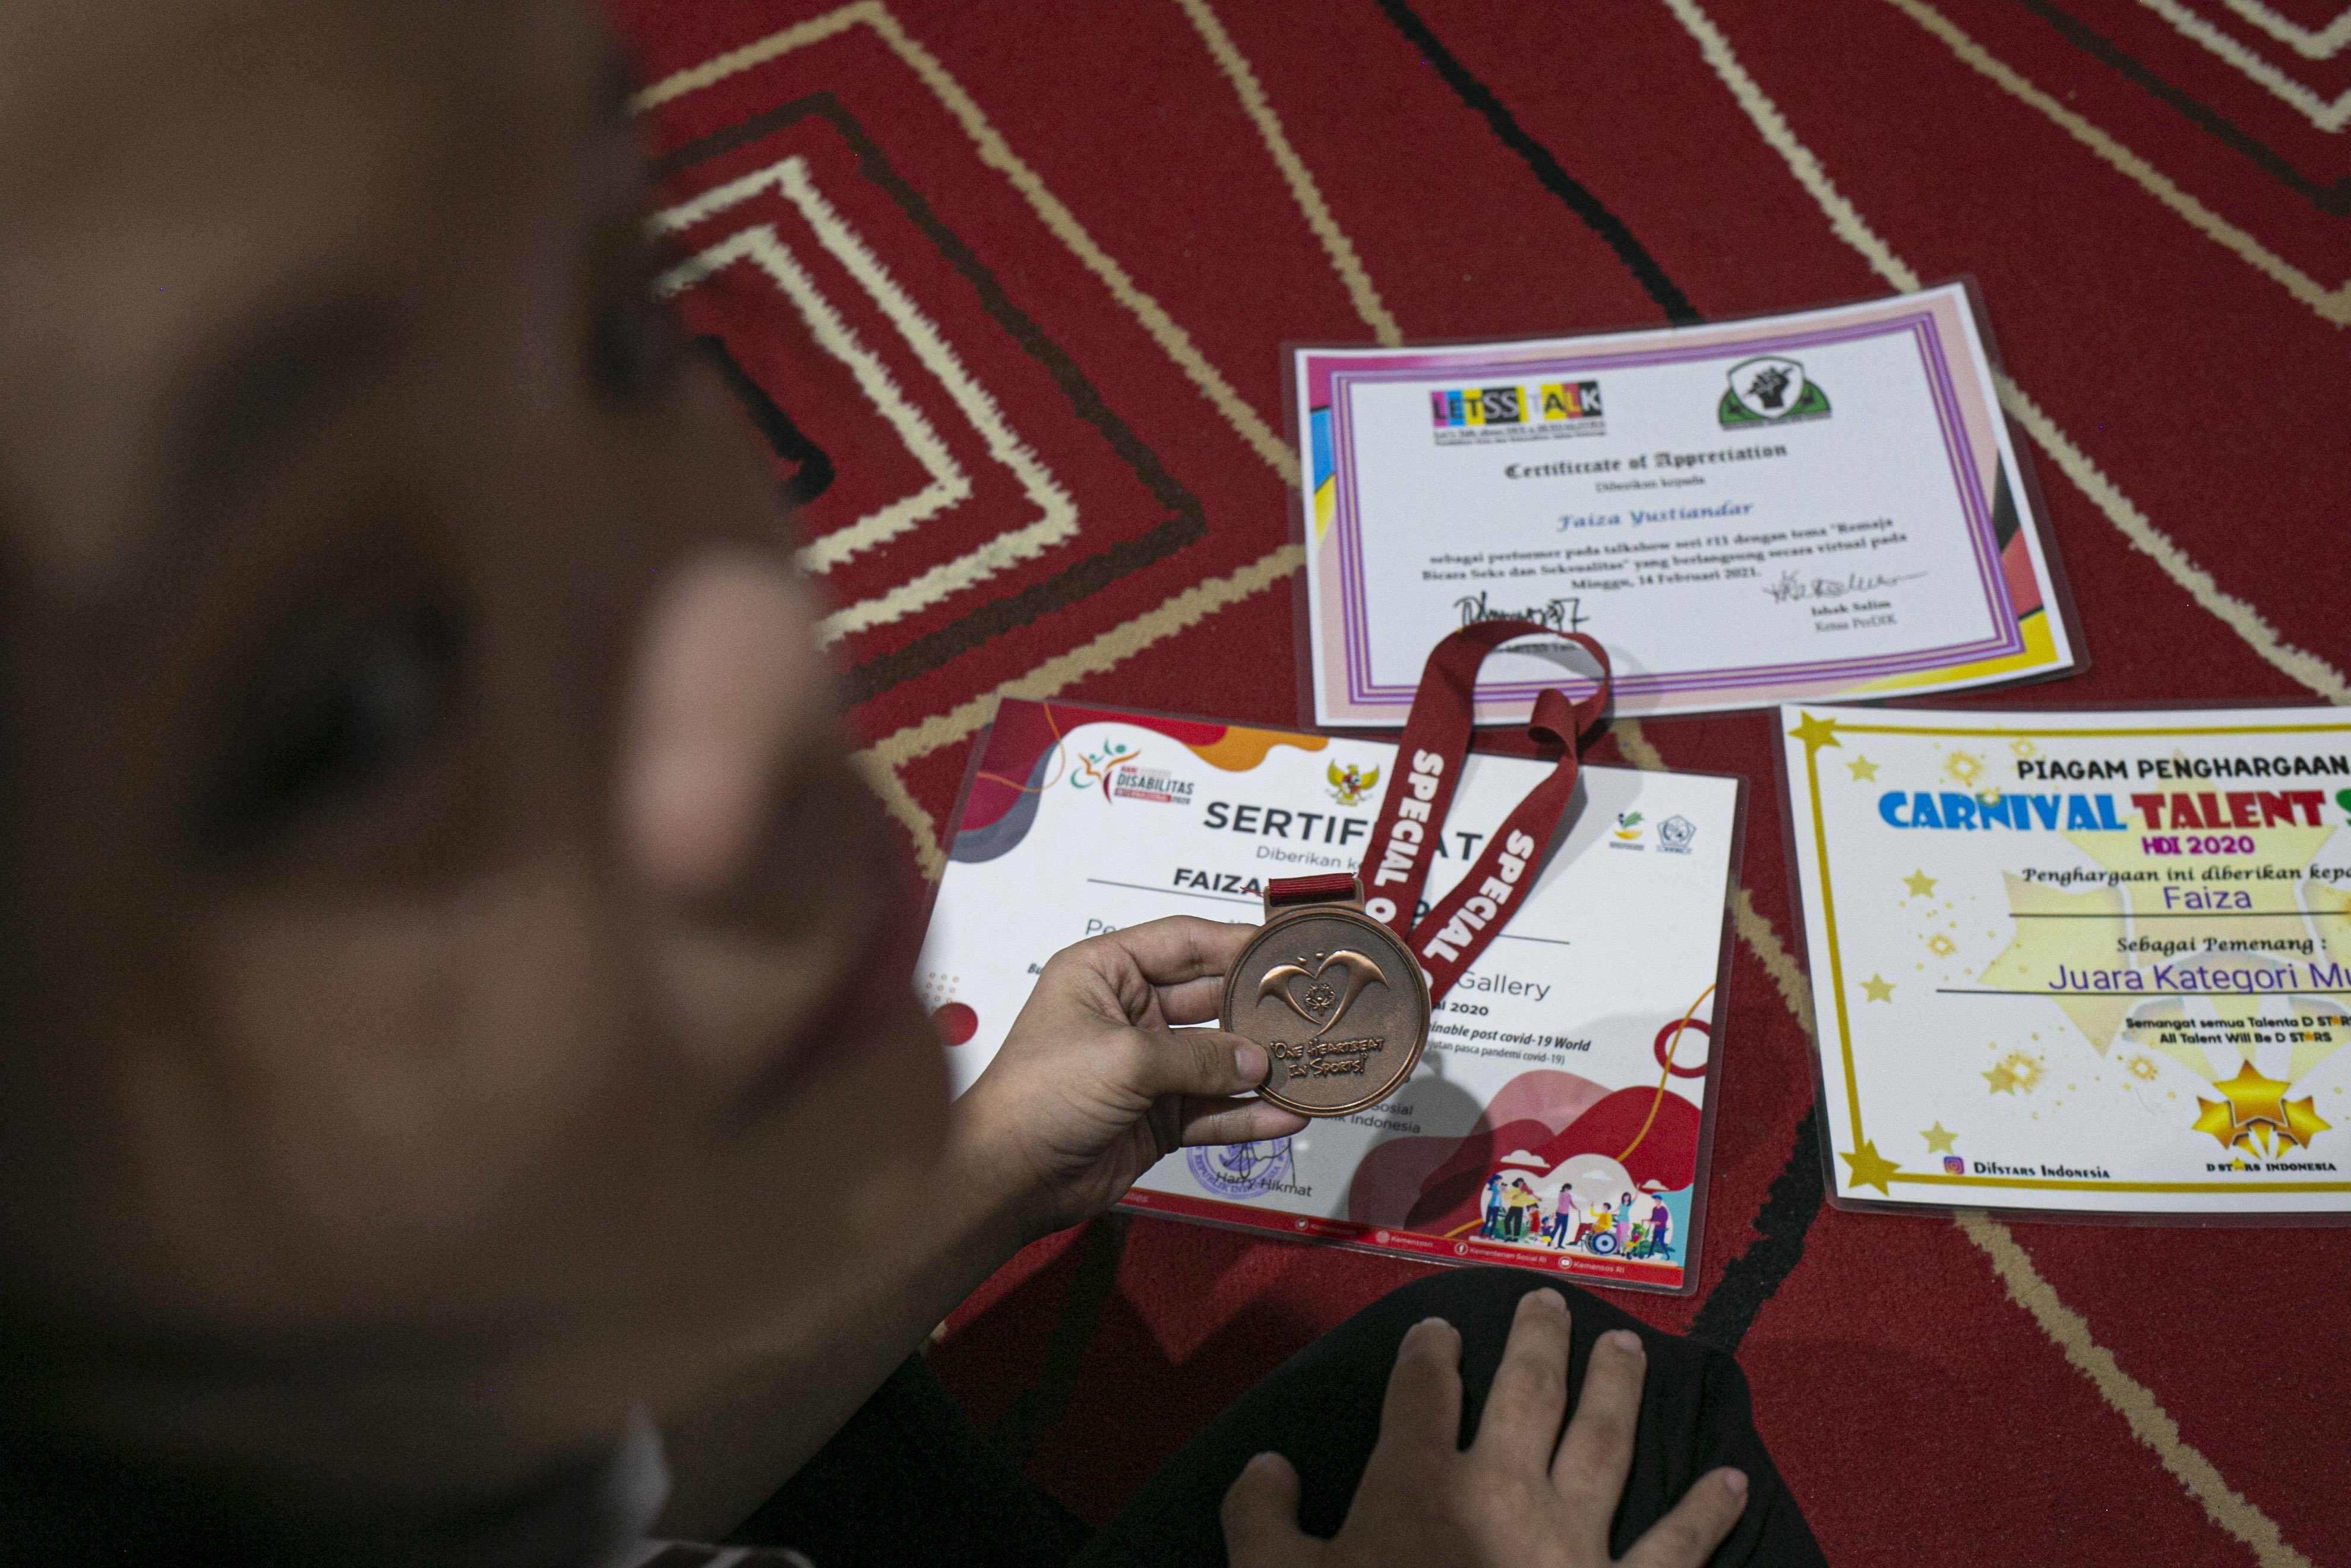 Faiza Yustiandari memperlihatkan sejumlah sertifikat dan medali atas prestasinya di bidang seni.